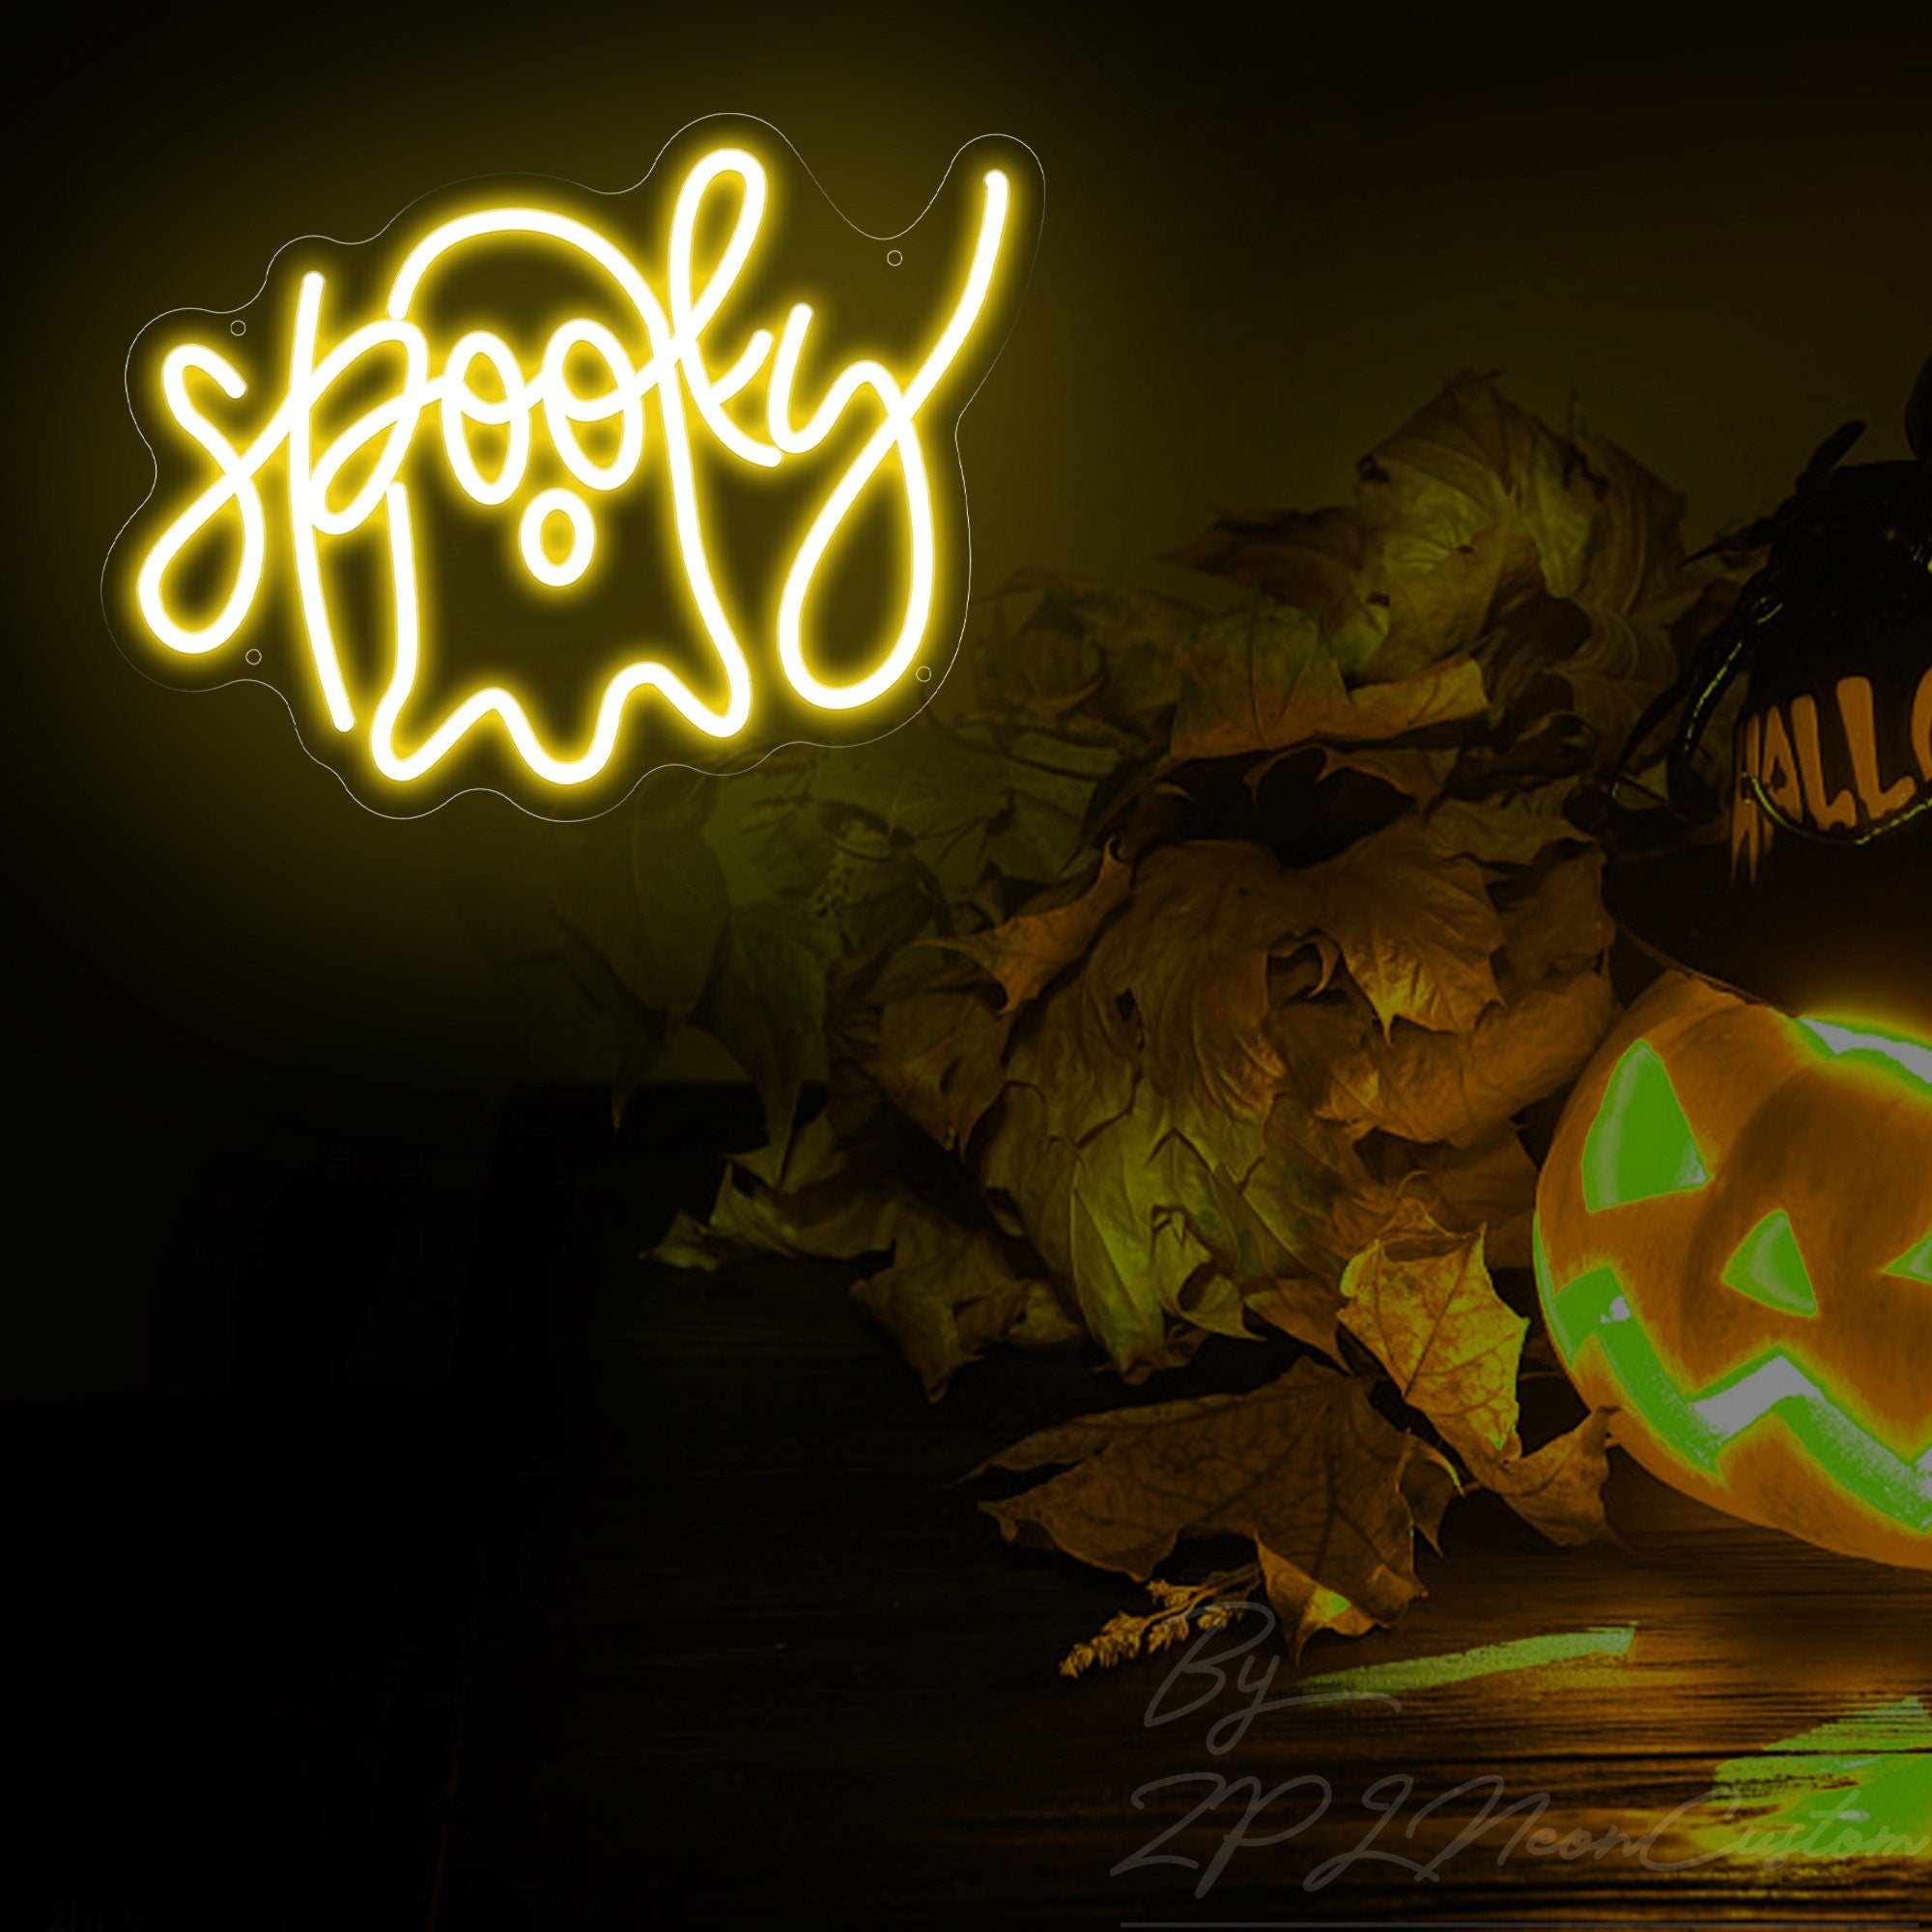 NEONIP-100% Handmade Spooky Ghost Neon Sign Halloween Party Event Decor